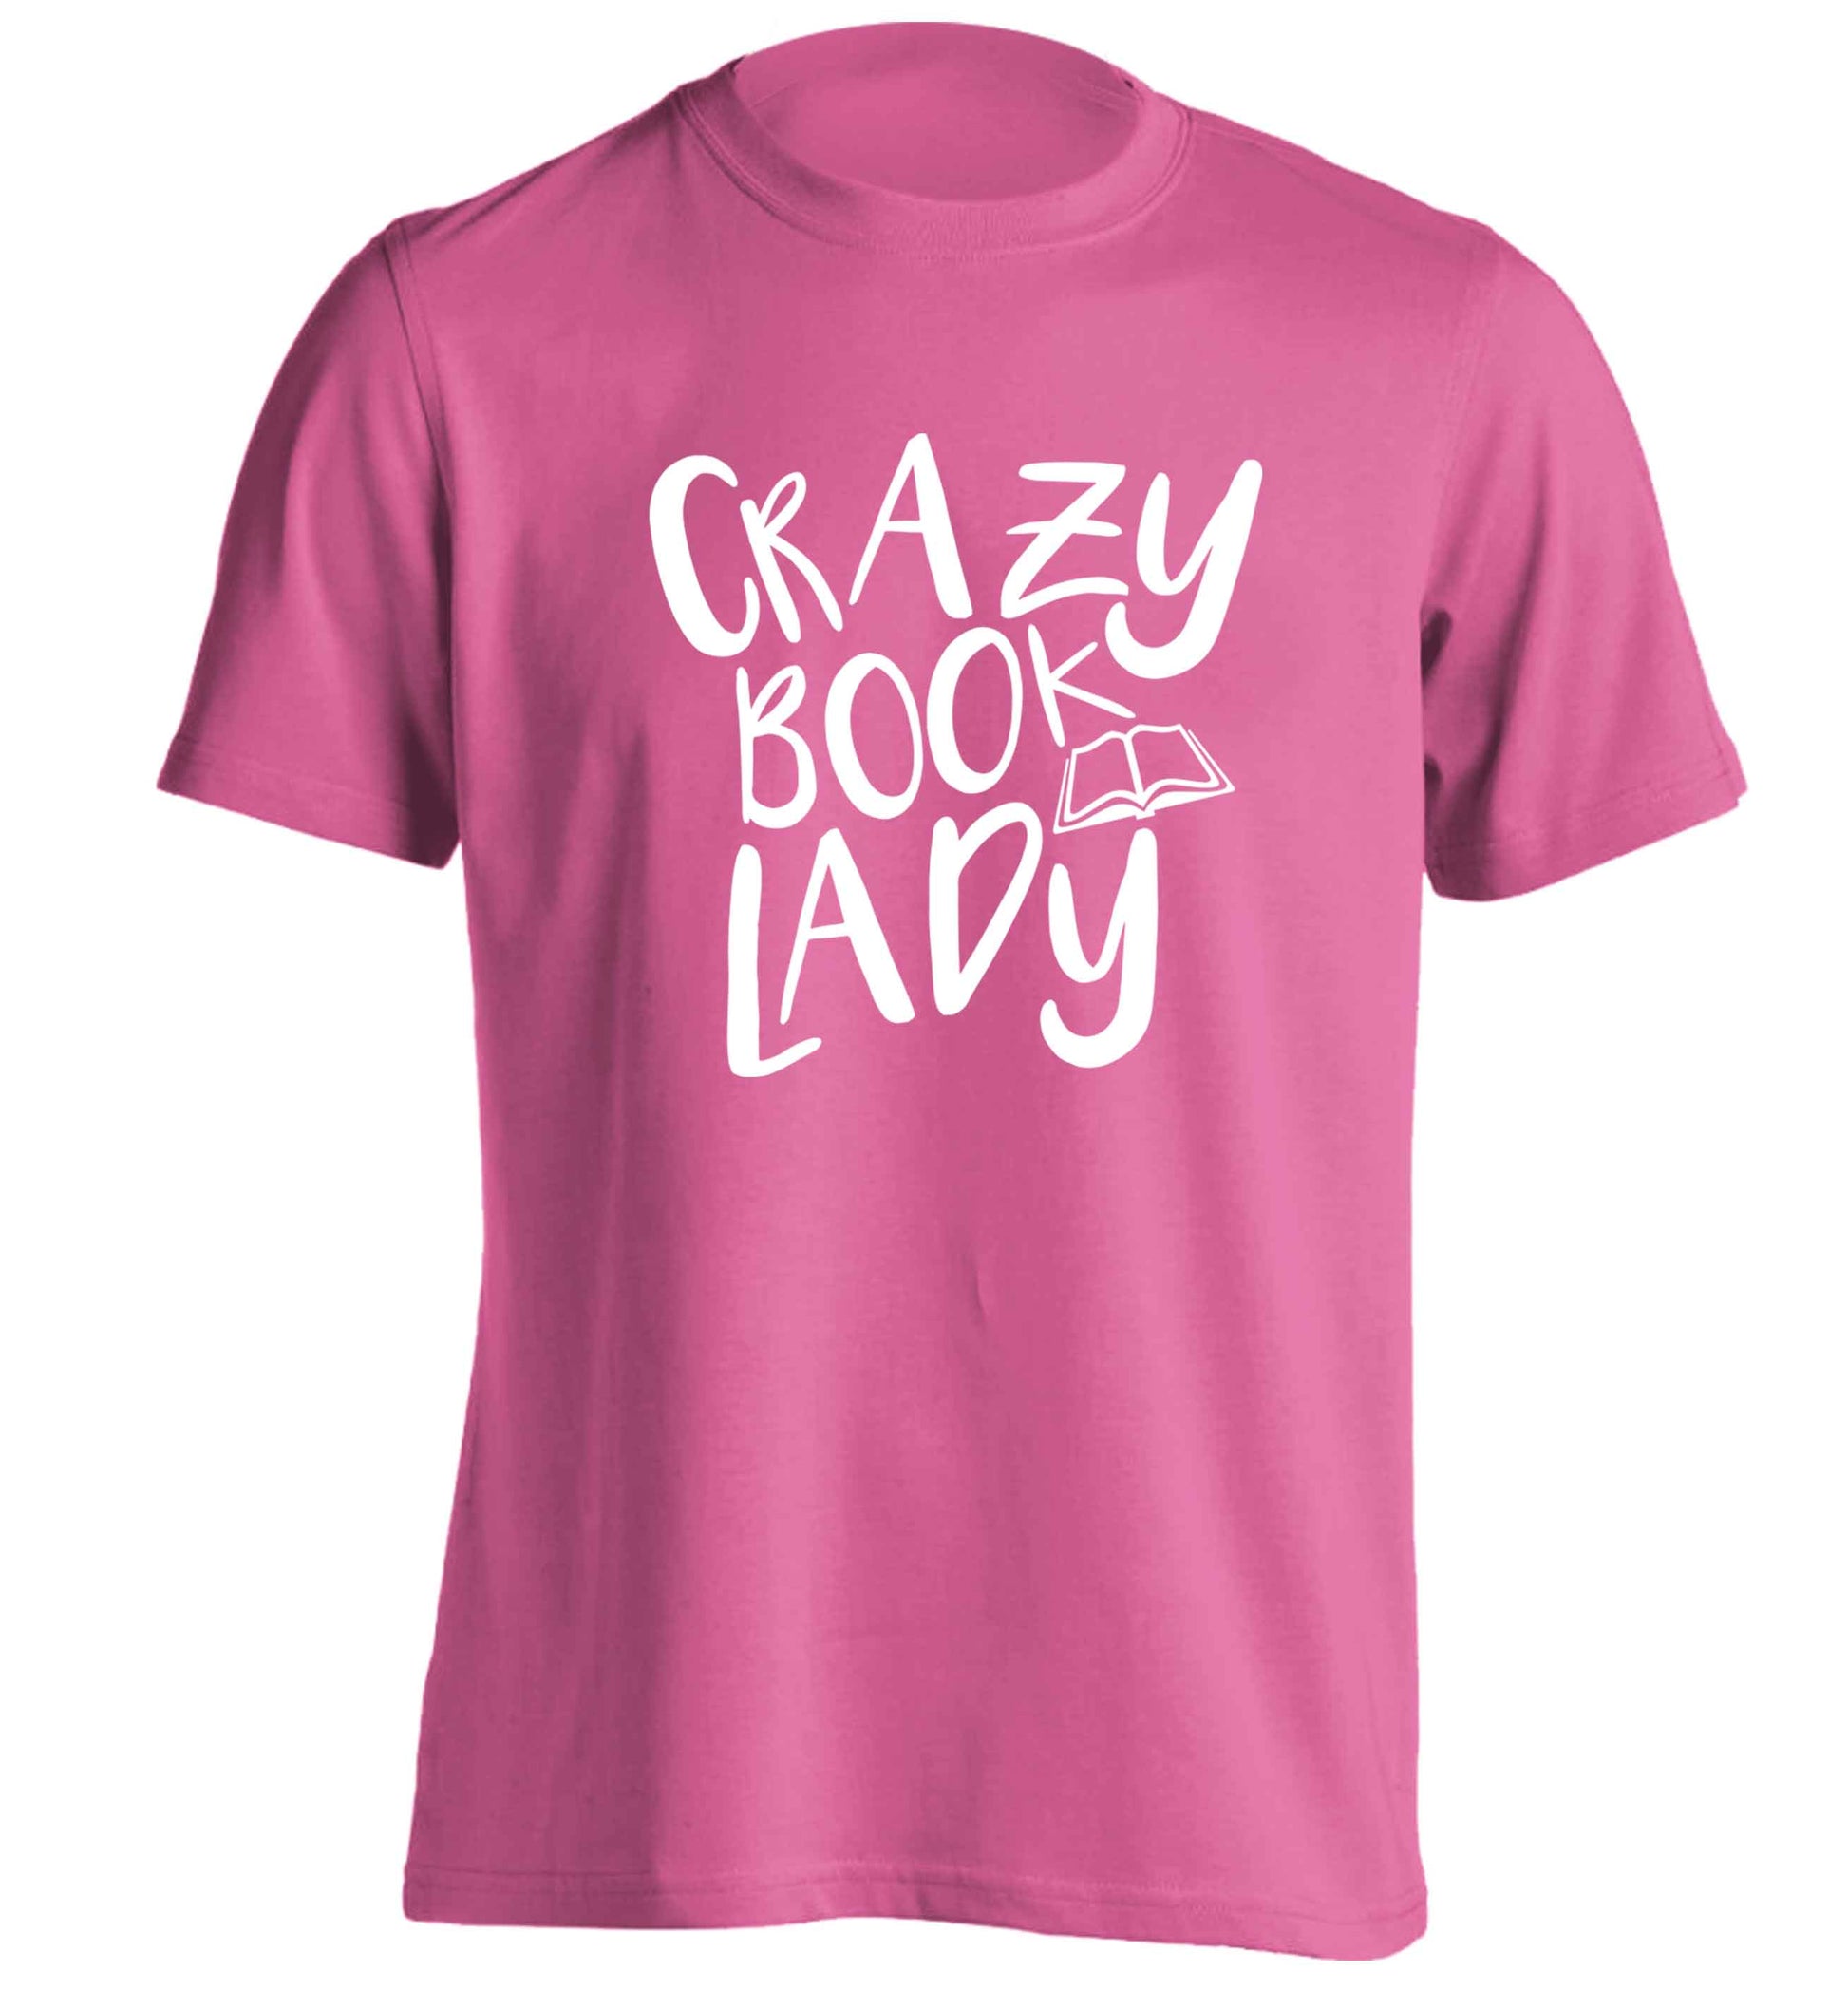 Crazy book lady adults unisex pink Tshirt 2XL